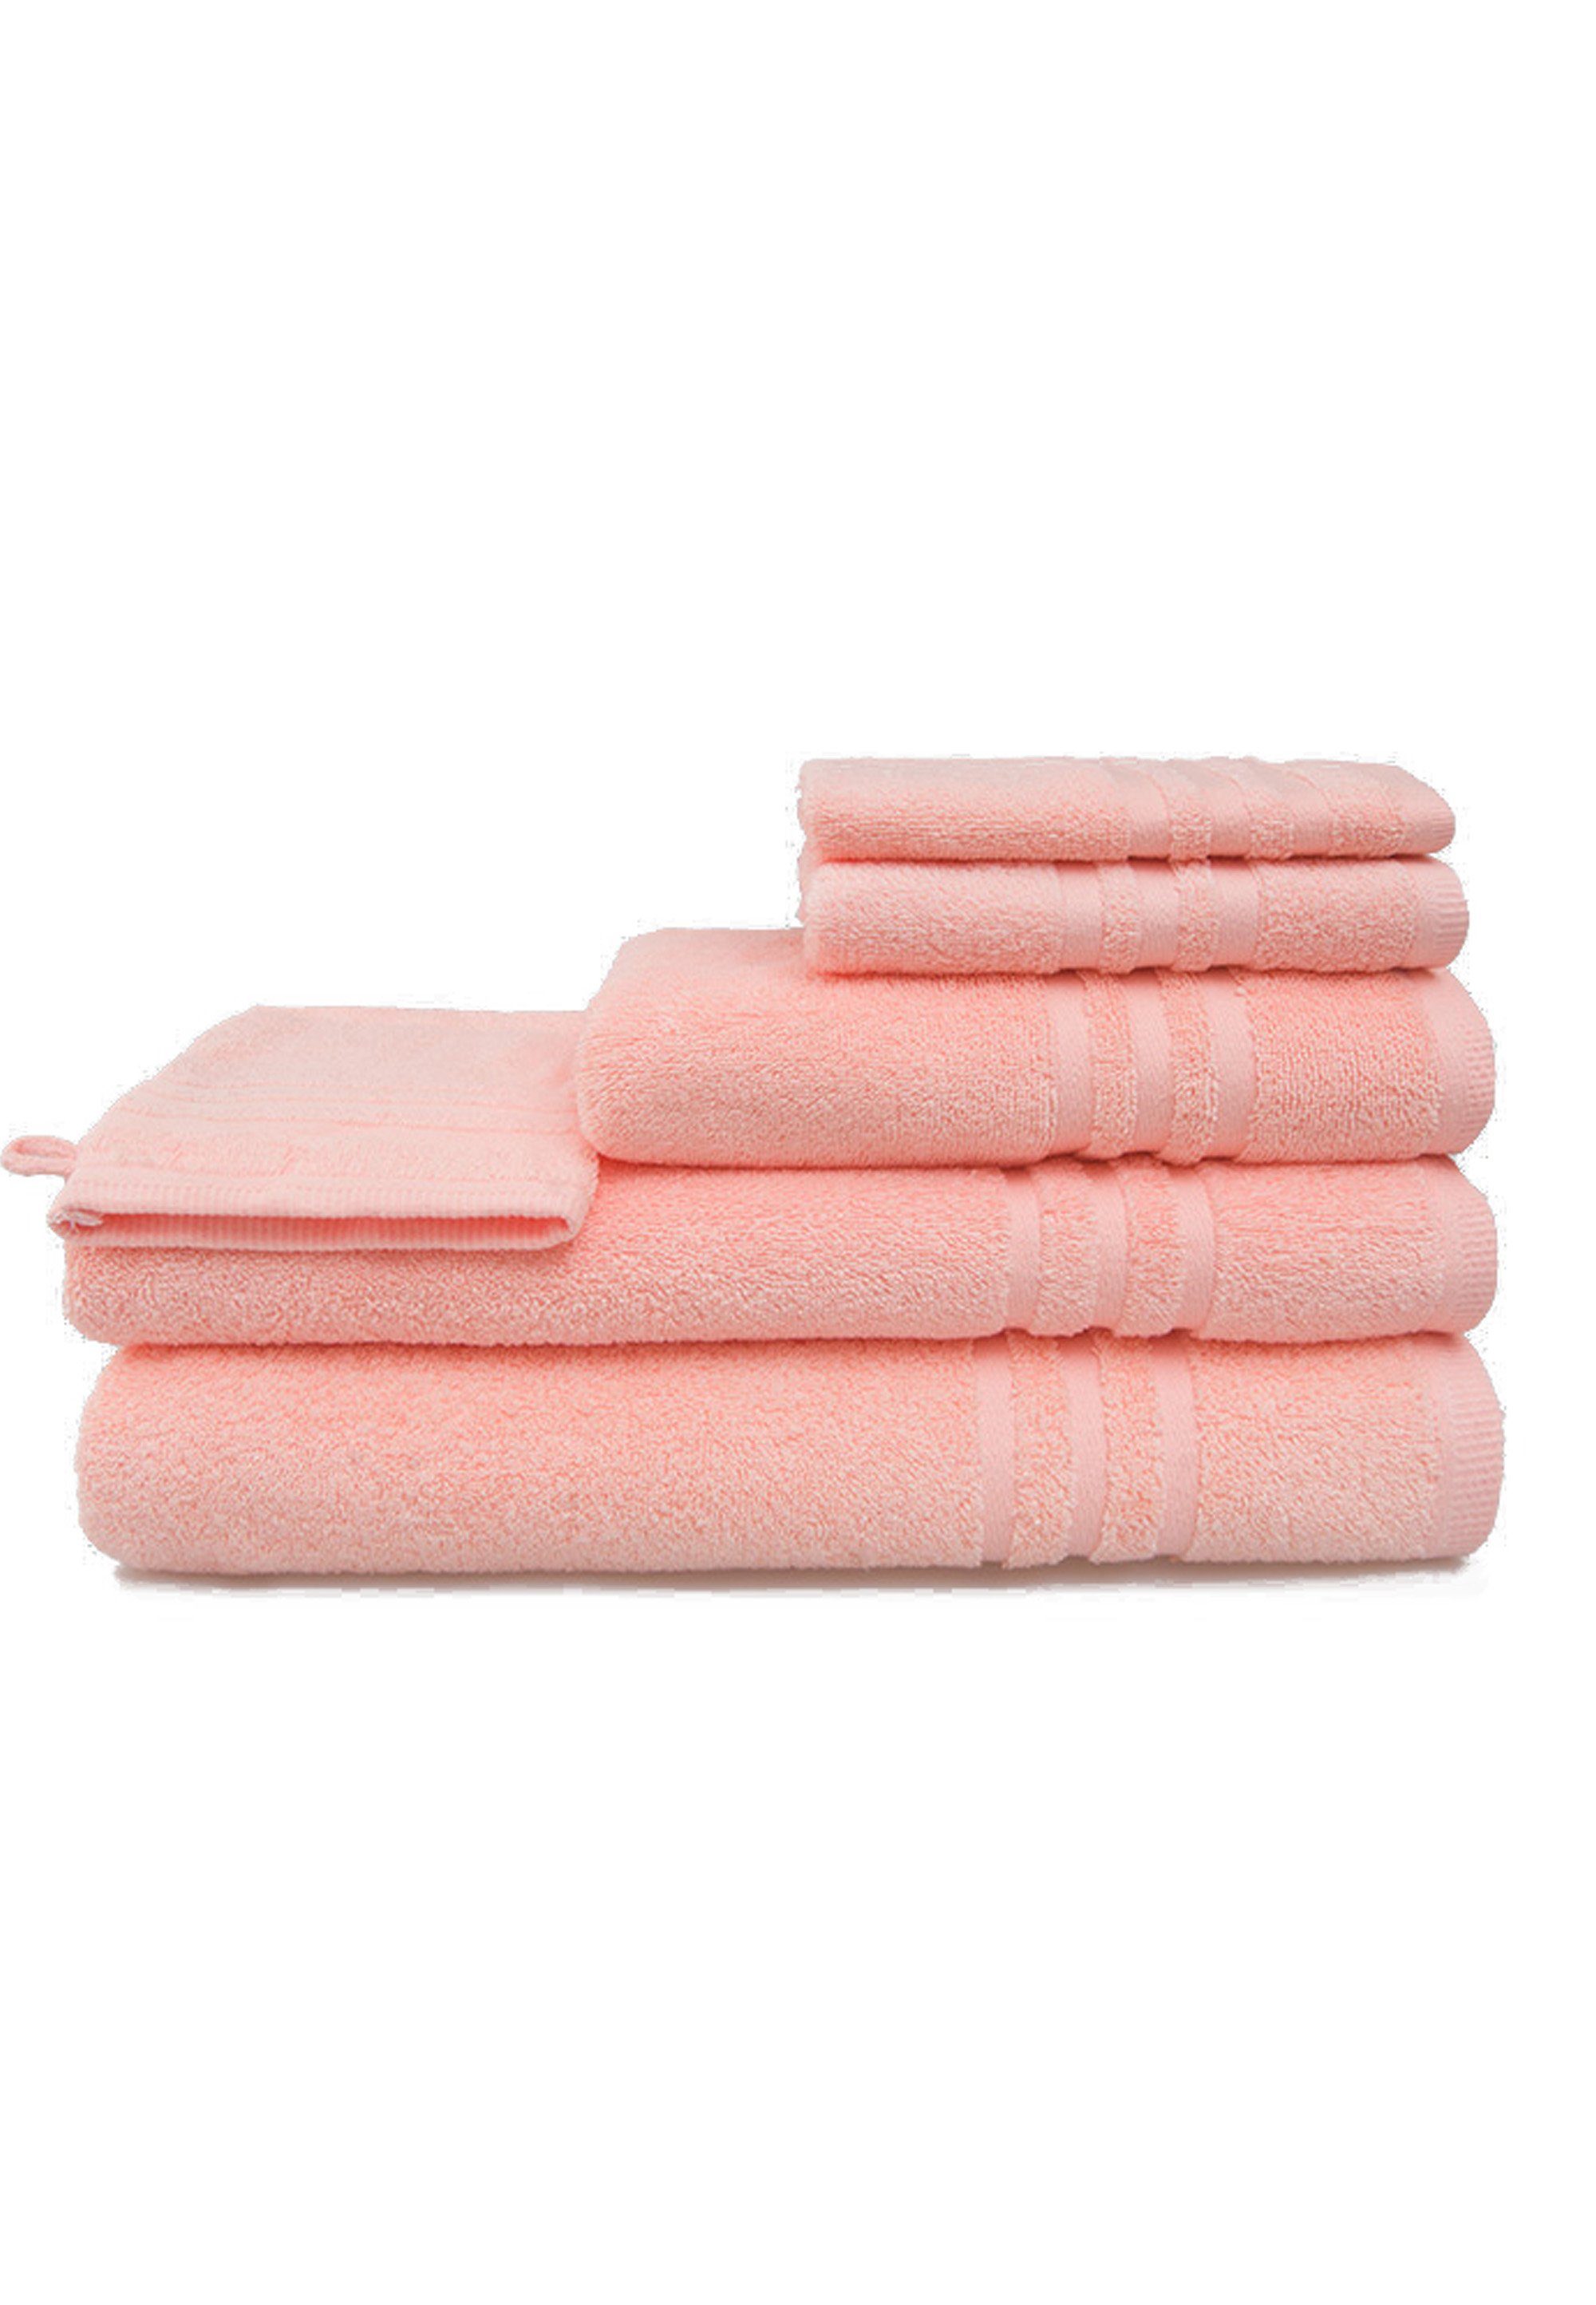 grace grand spa Handtuch Set, (6-tlg), 6-teilig mit hochwertiger Verarbeitung rosa